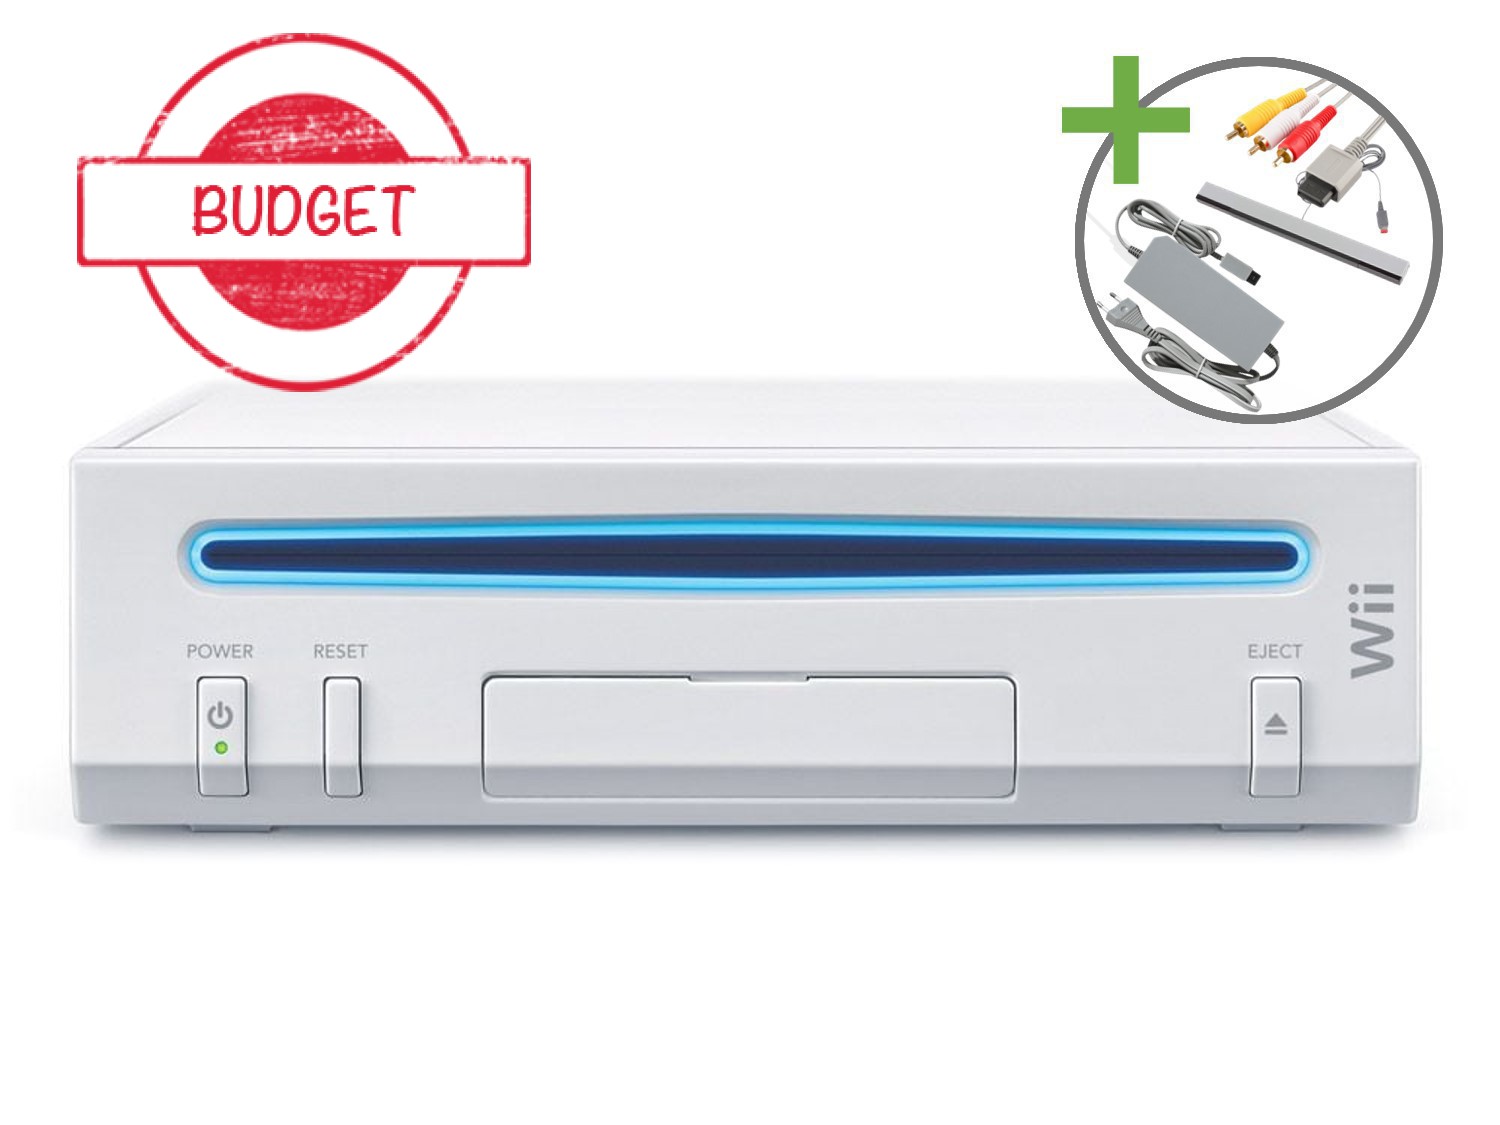 Nintendo Wii Starter Pack - Mario Kart Motion Plus White Edition - Budget - Wii Hardware - 2